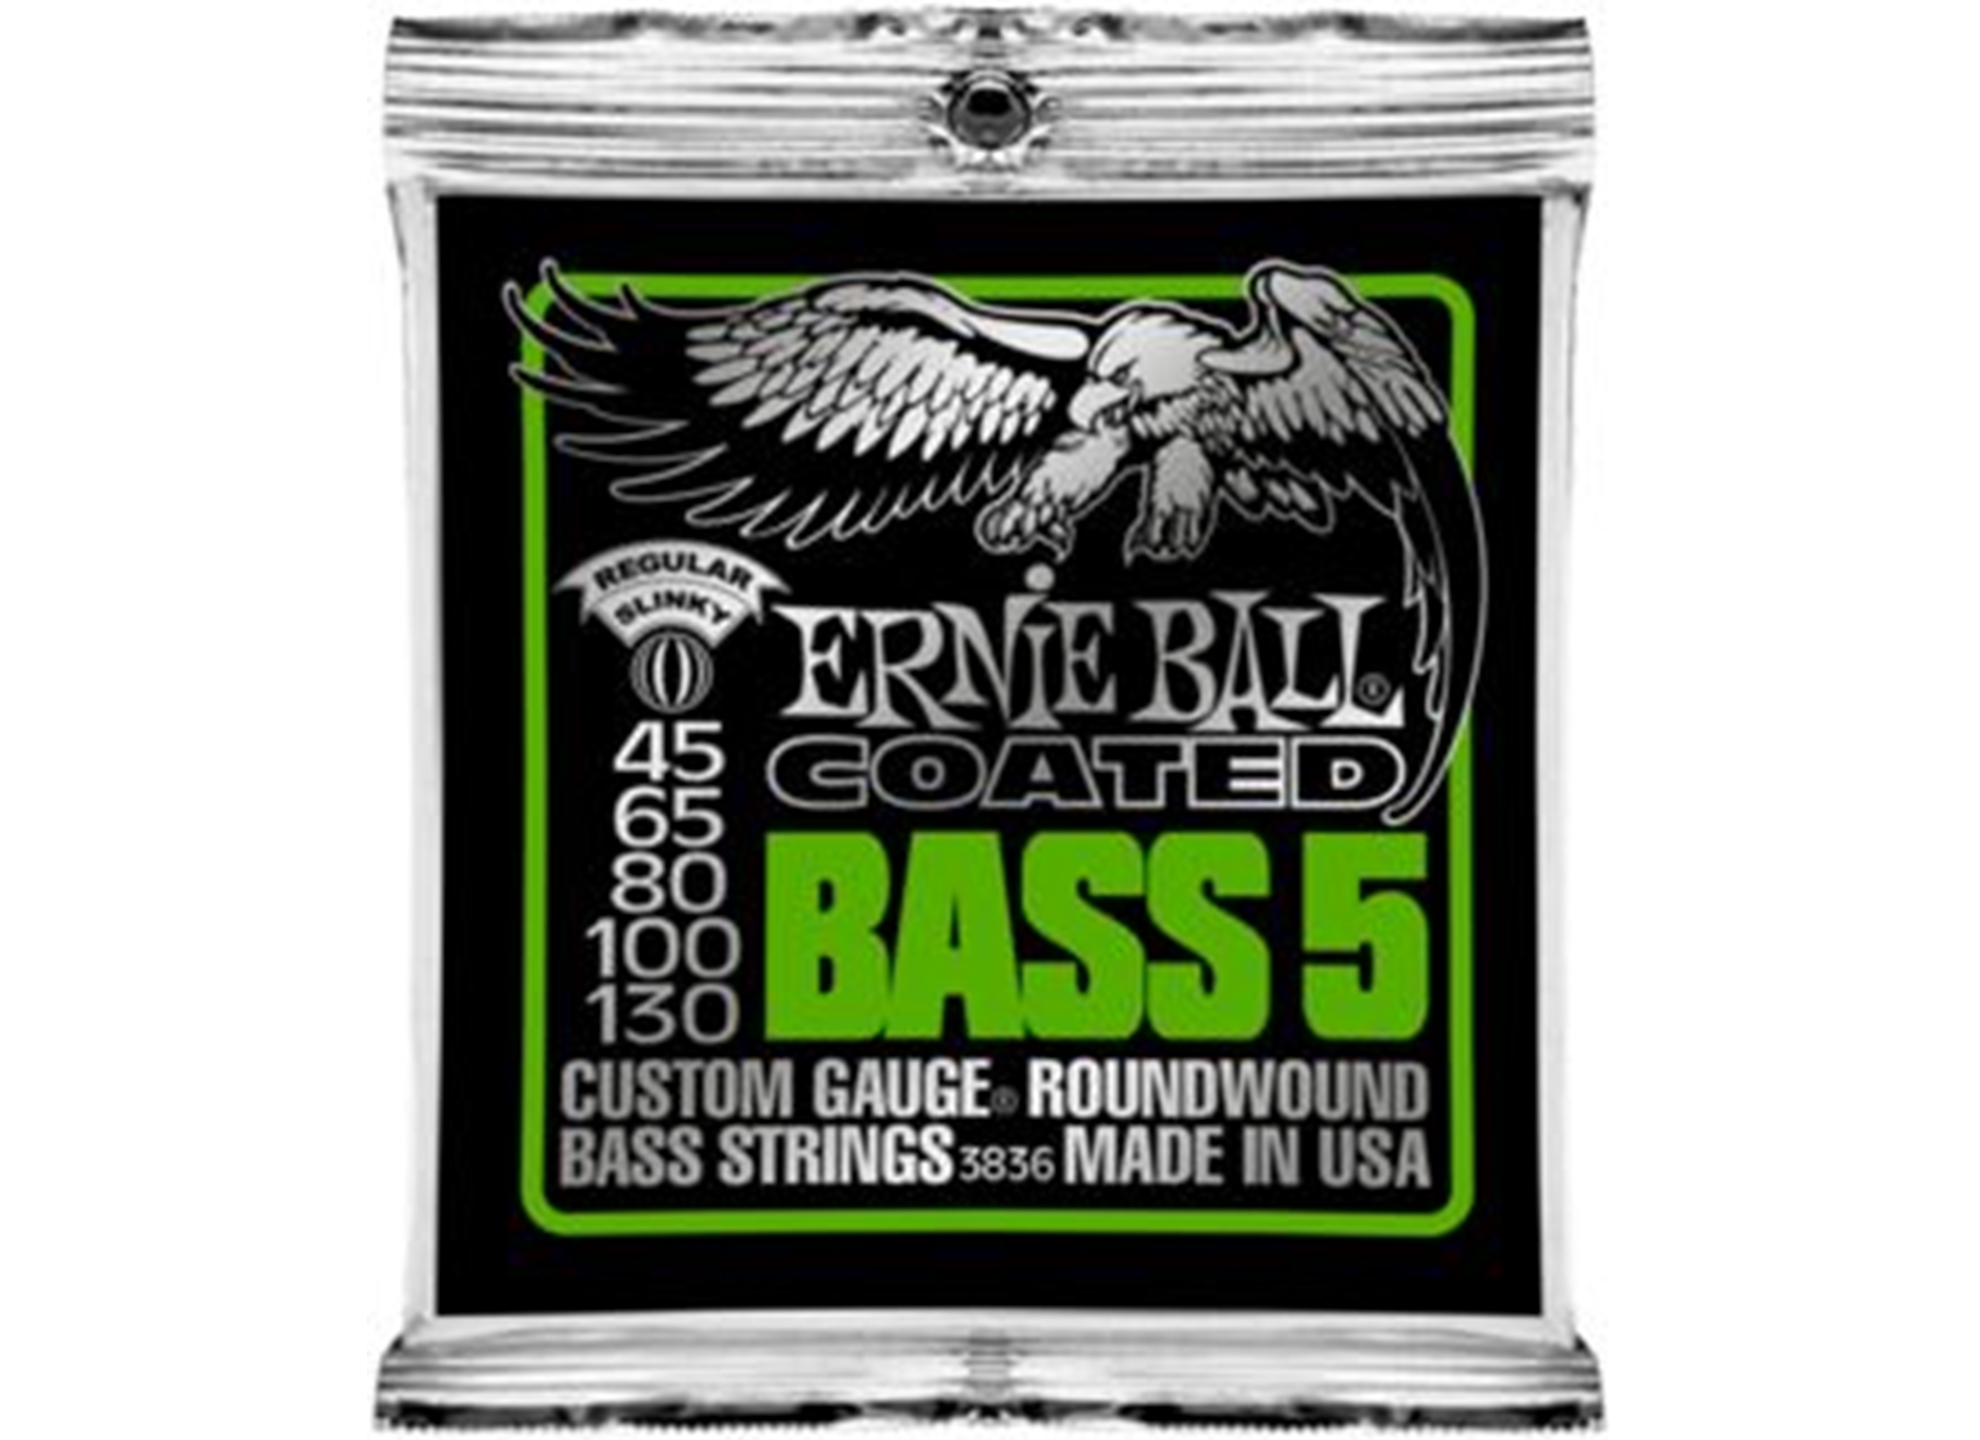 045-130 Regular Slinky Coated Bass 5-string Nickel Wound 2836